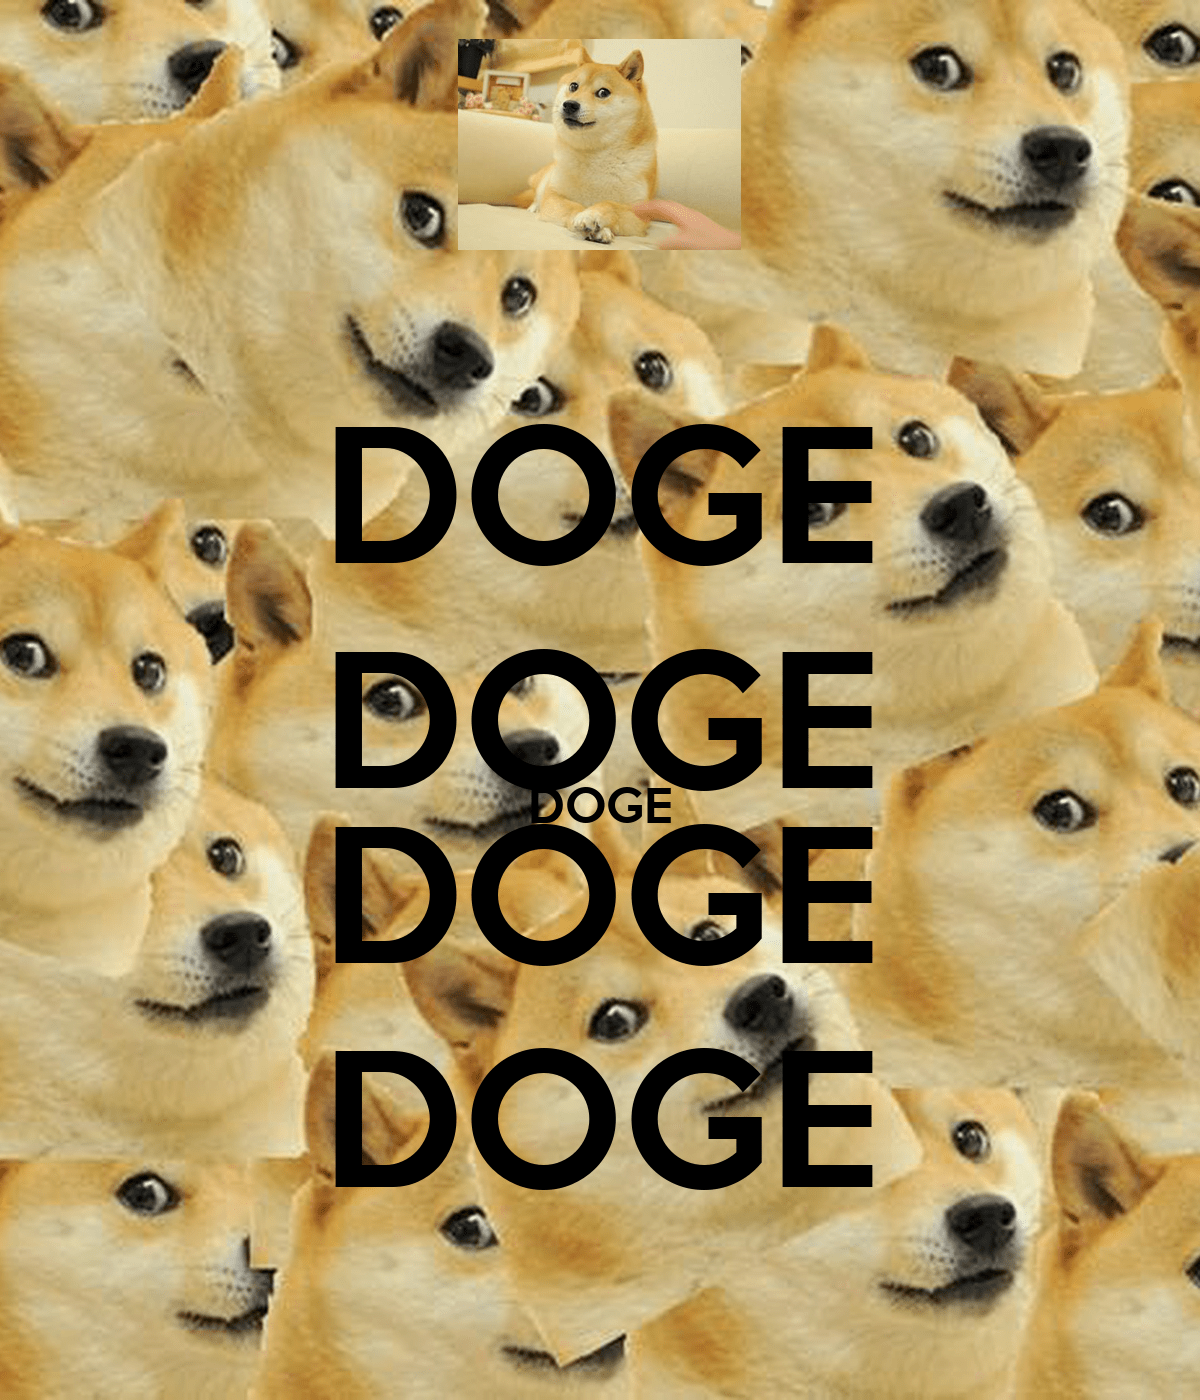 Doge Pictures [HD] | Download Free Images on Unsplash